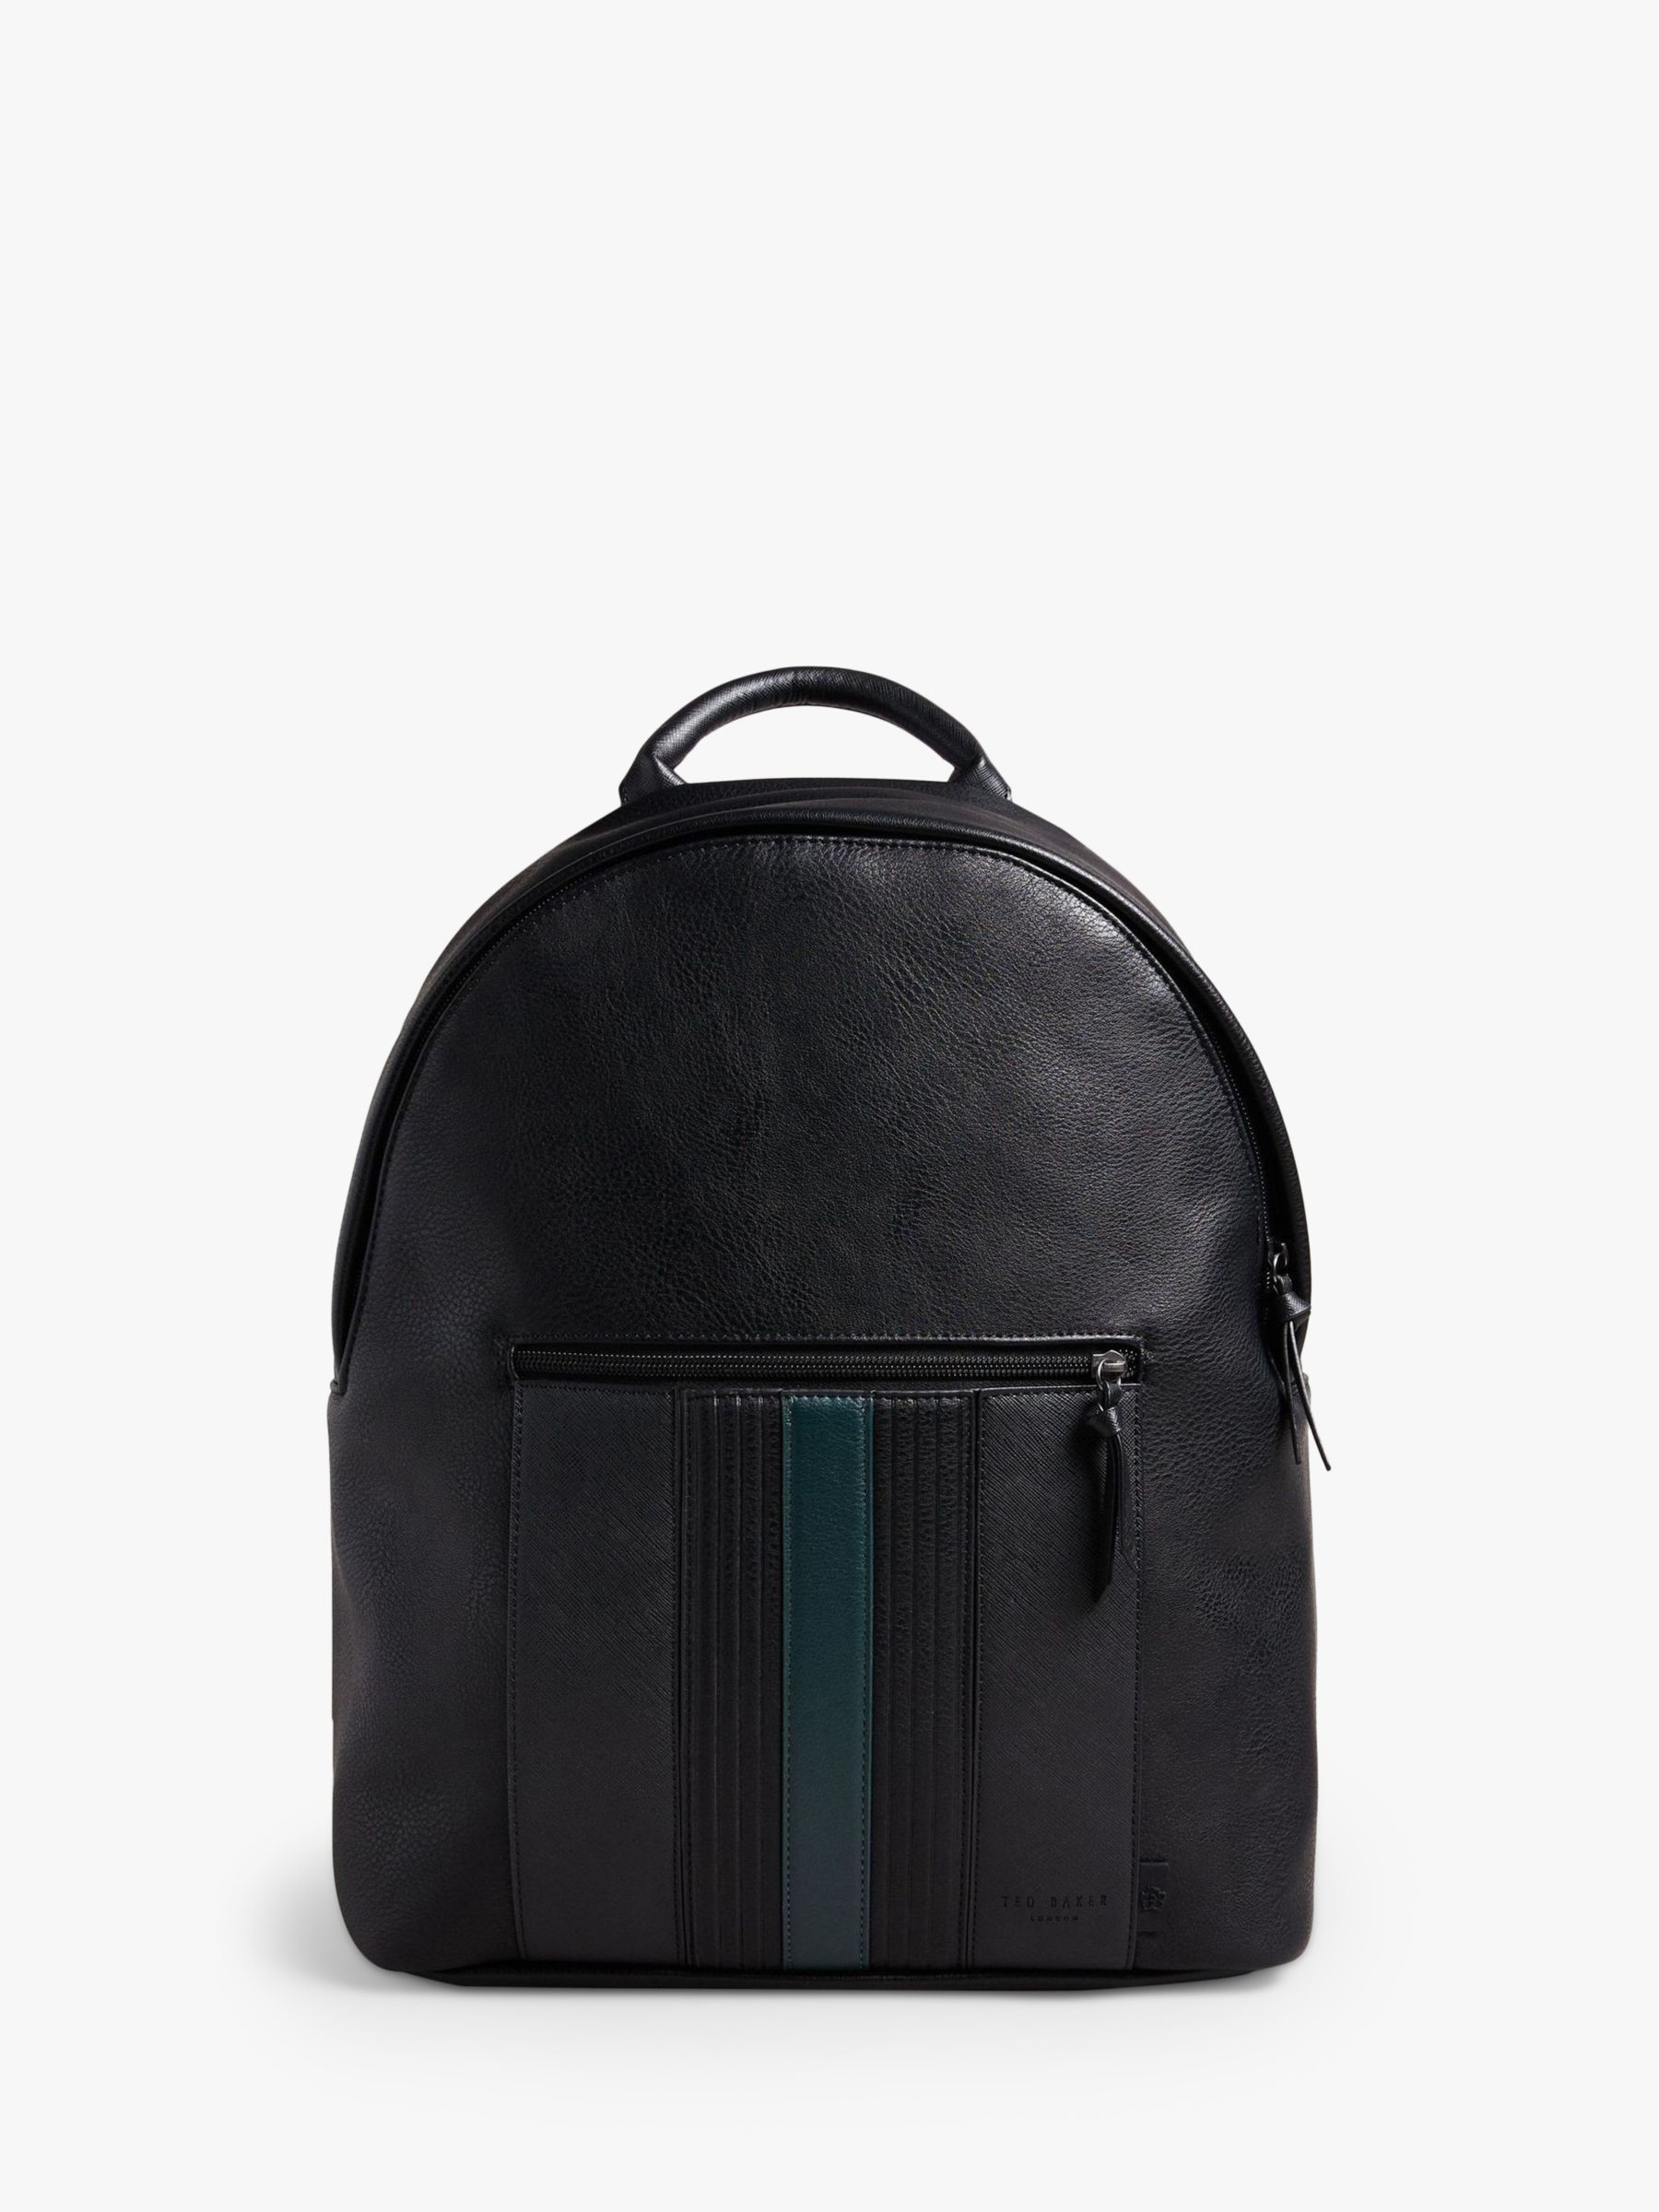 Ted Baker Esentle Striped Backpack, Black at John Lewis & Partners